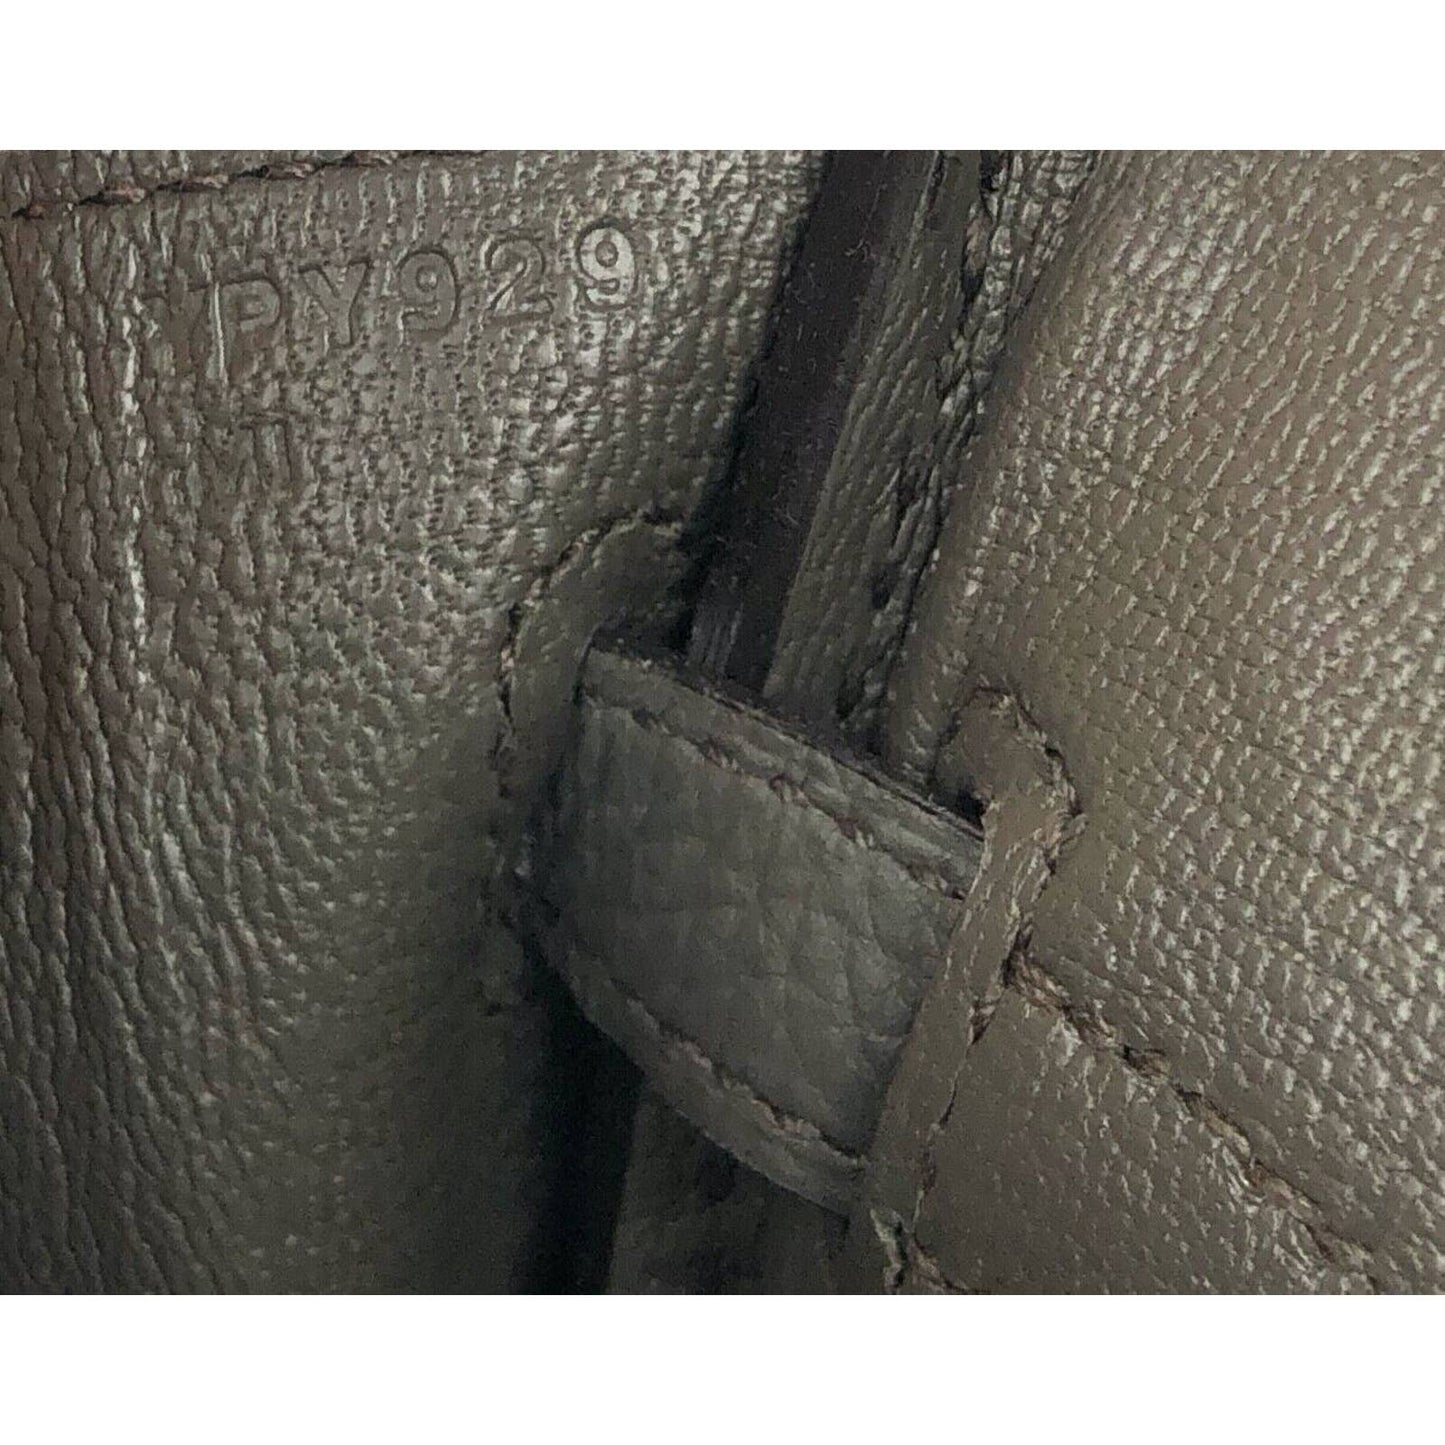 Hermes Birkin 25 Etain Gray Brown Grey Togo Leather Gold Hardware Handbag 2020